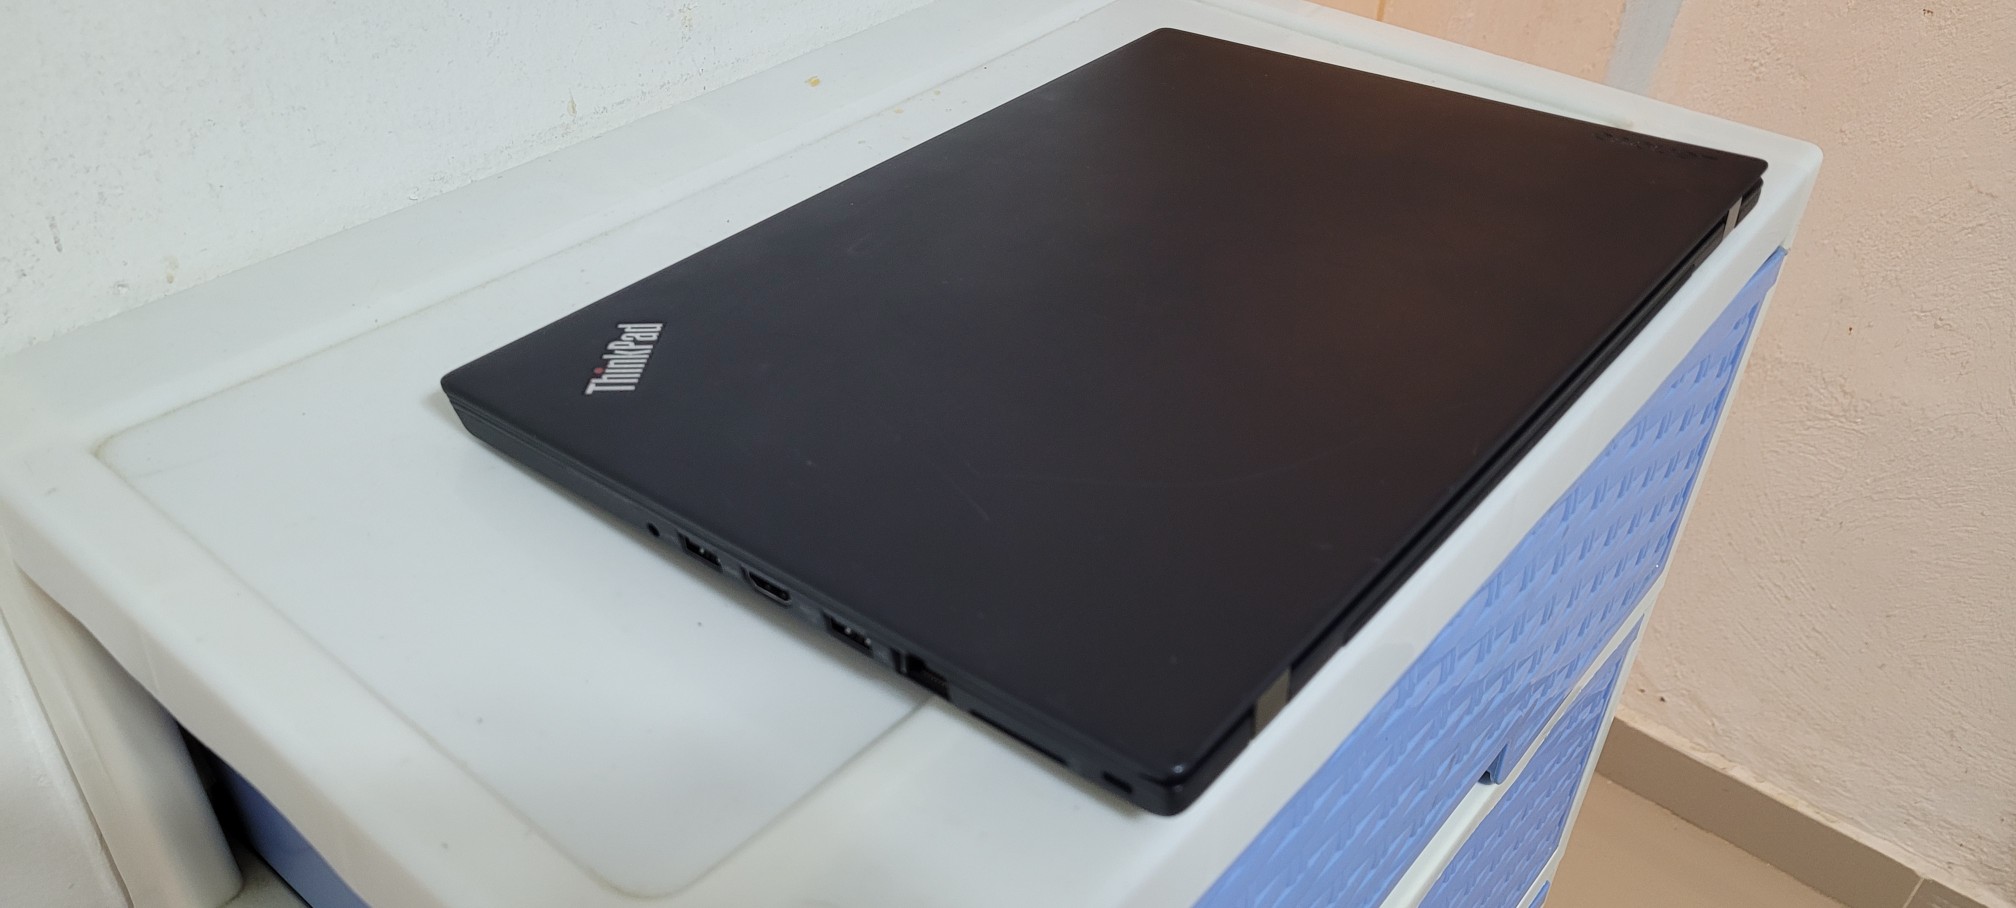 computadoras y laptops - Laptop lenovo Slim 14 Pulg Core i7 Ram 8gb Disco 256gb SSD Wifi Bluetoth 2